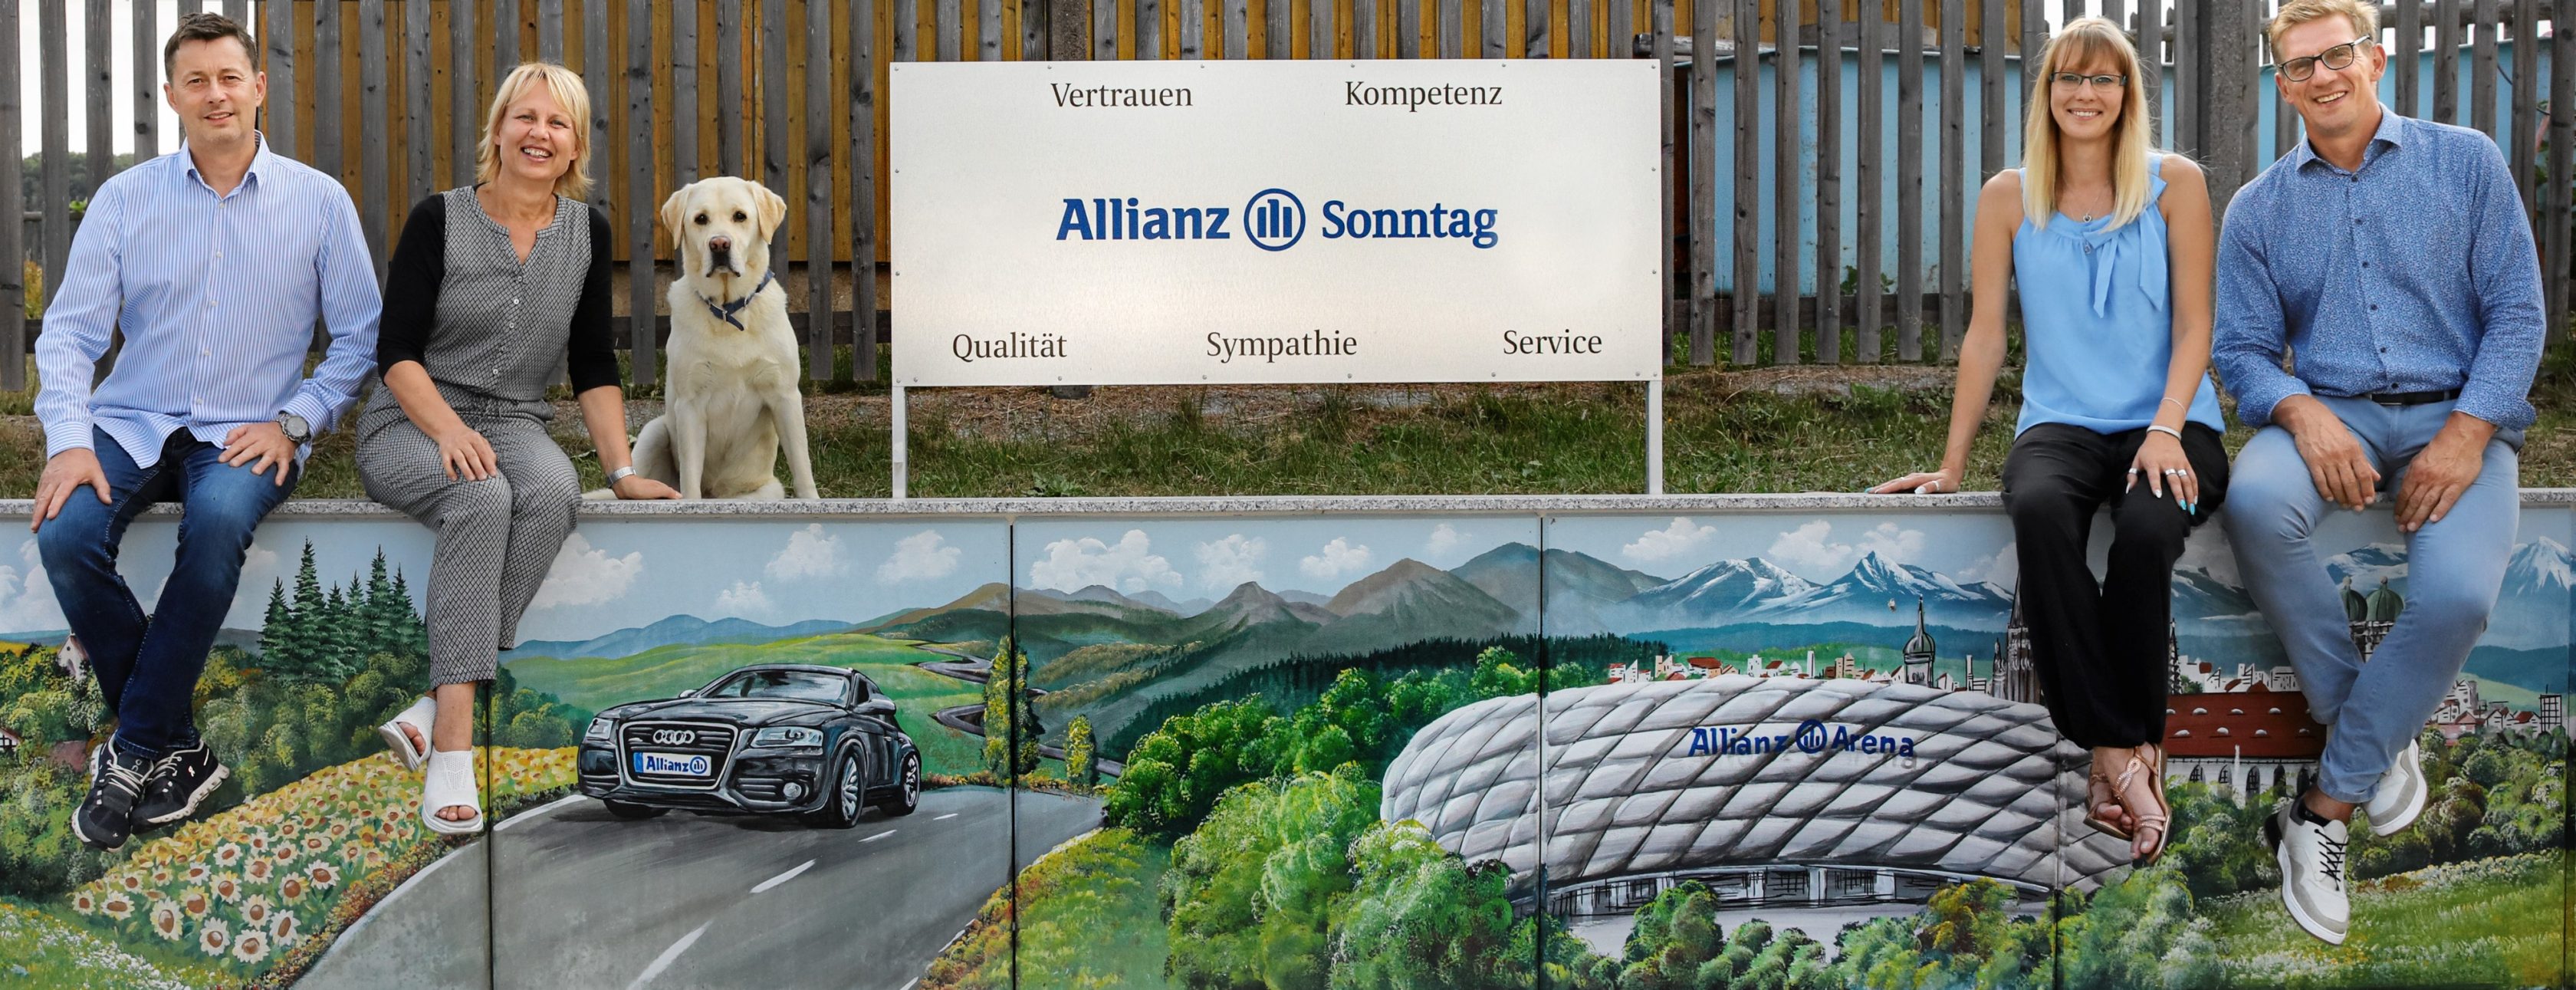 Allianz Versicherung Jens Sonntag Rückersdorf - Titelbild